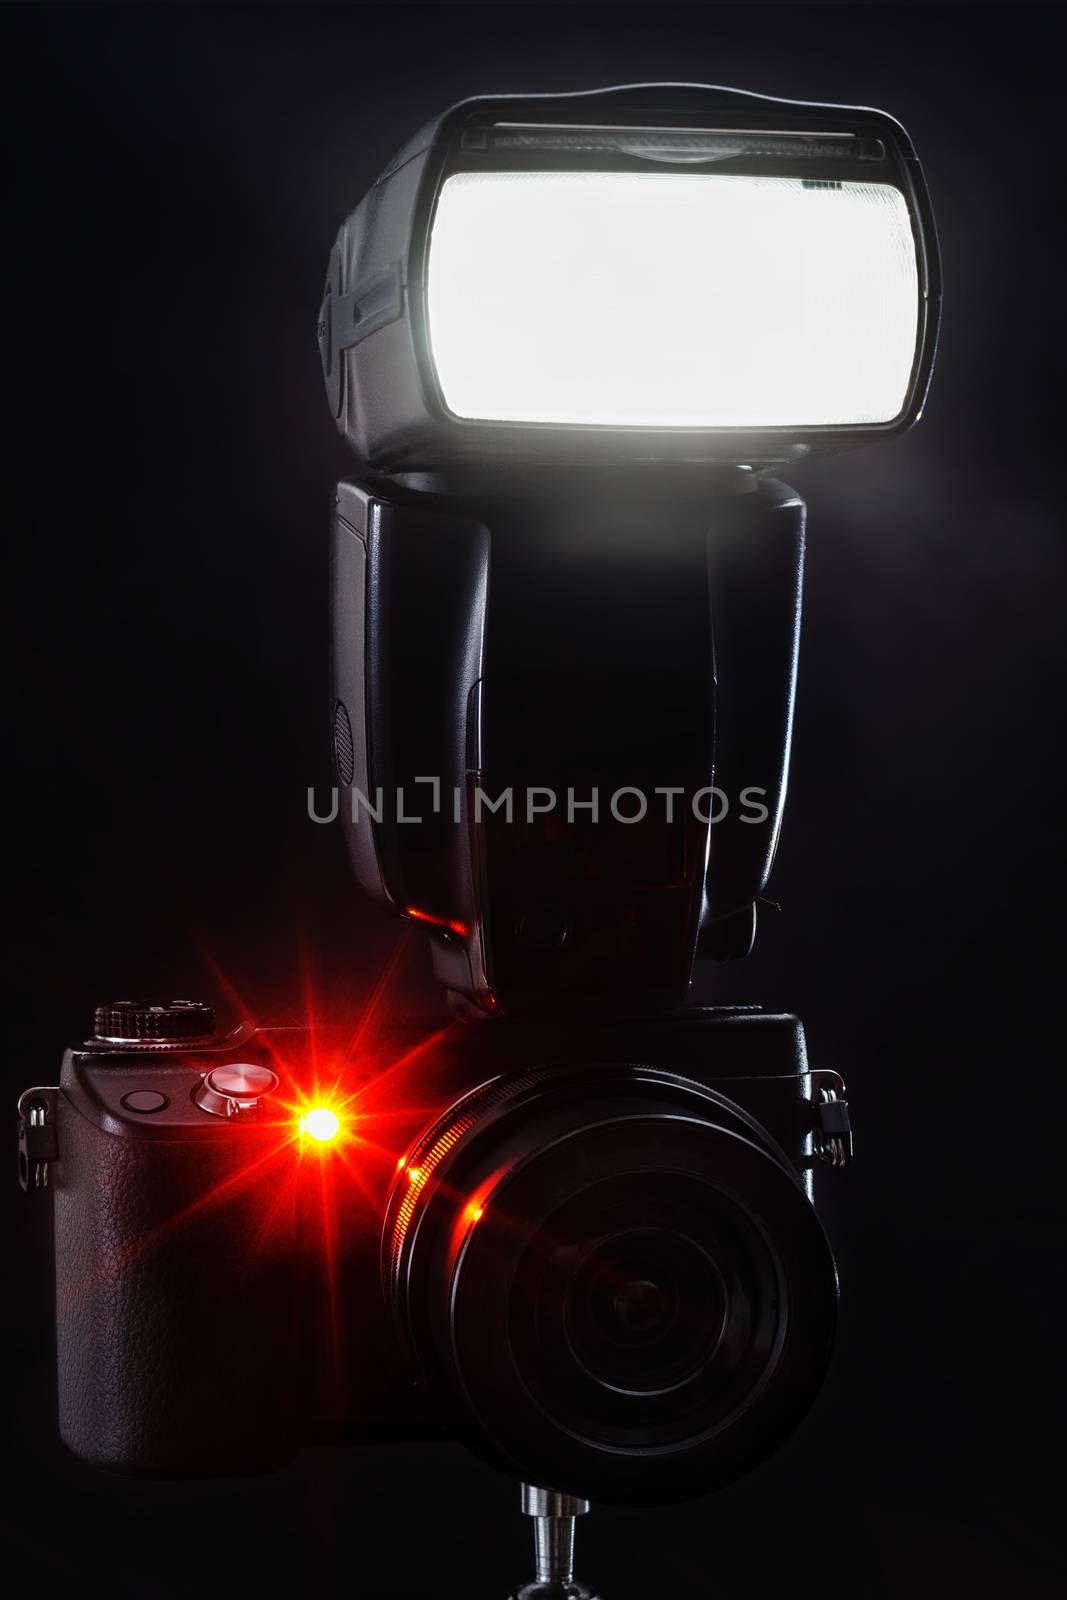 black mirrorless camera with flash on black background